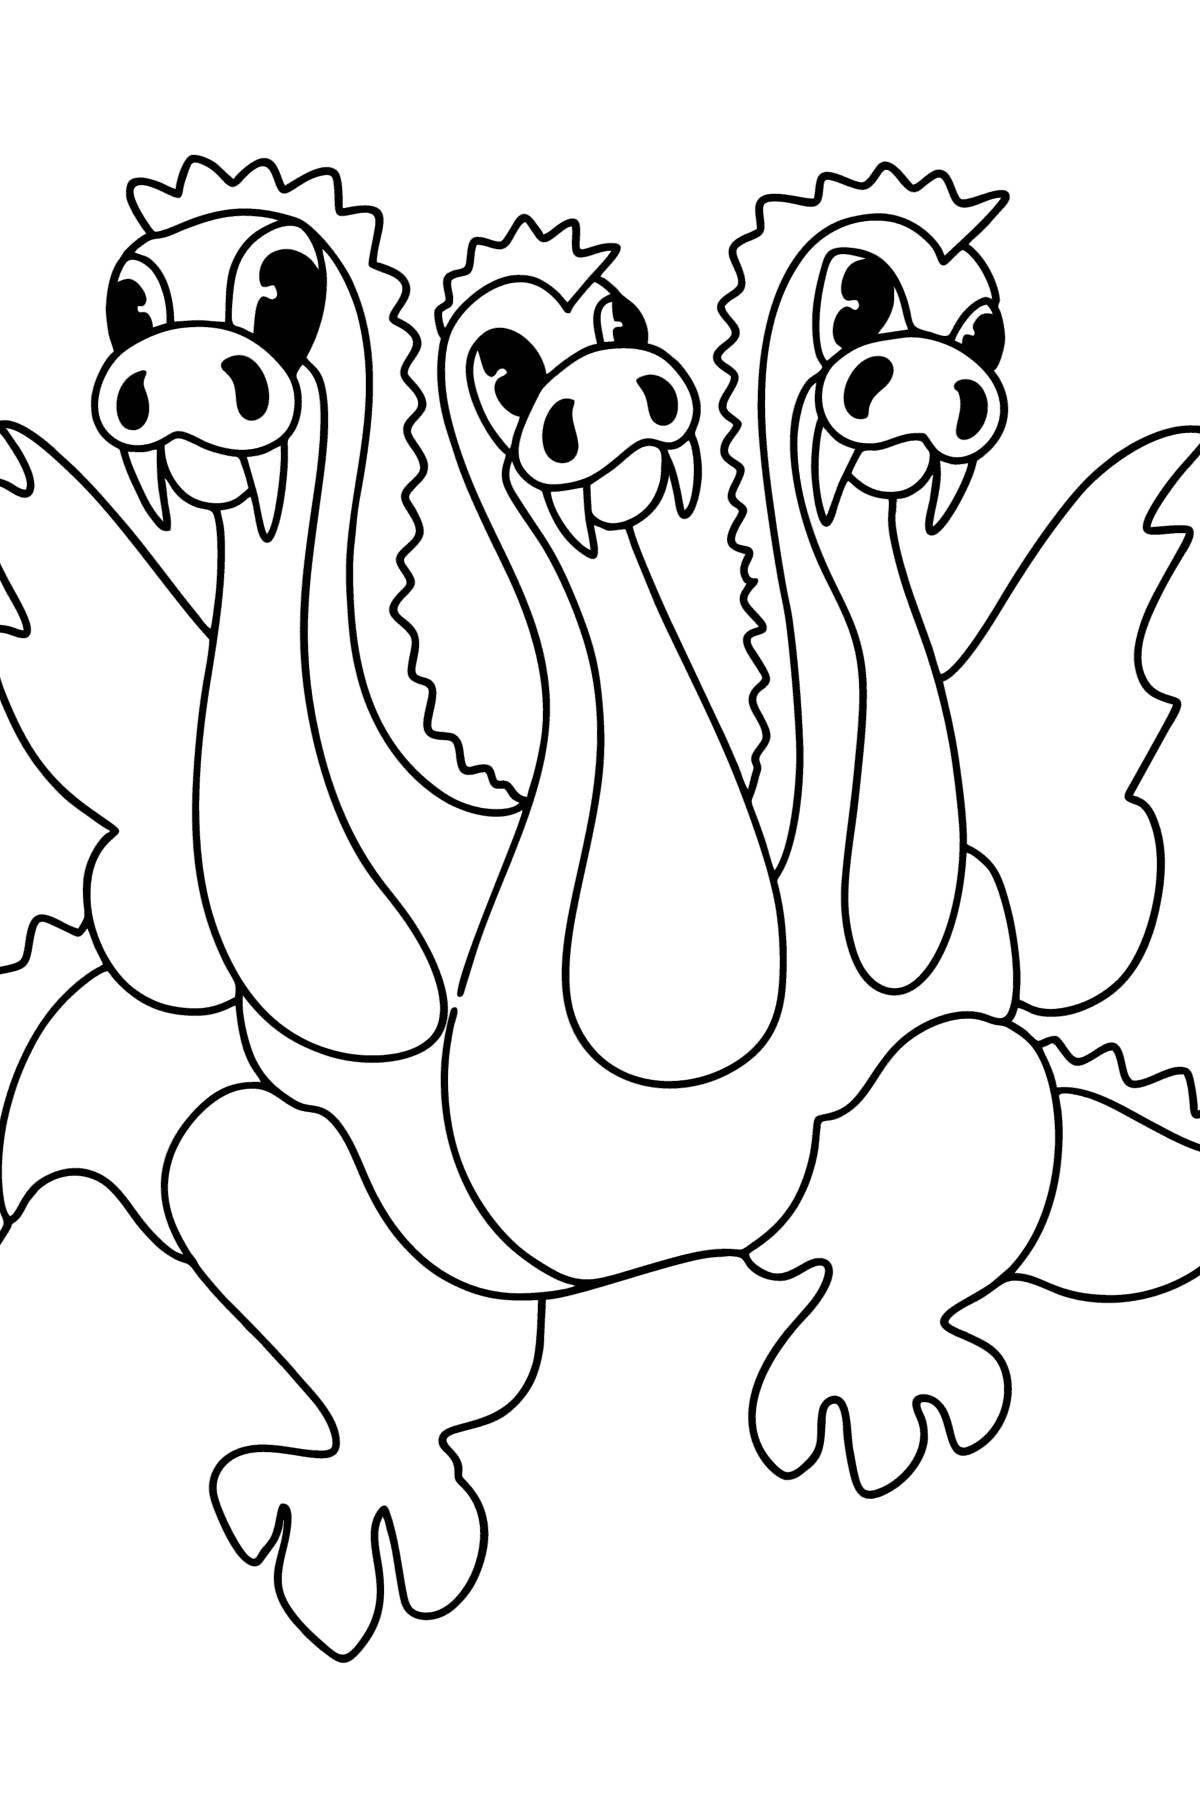 Coloring book bright three-headed dragon